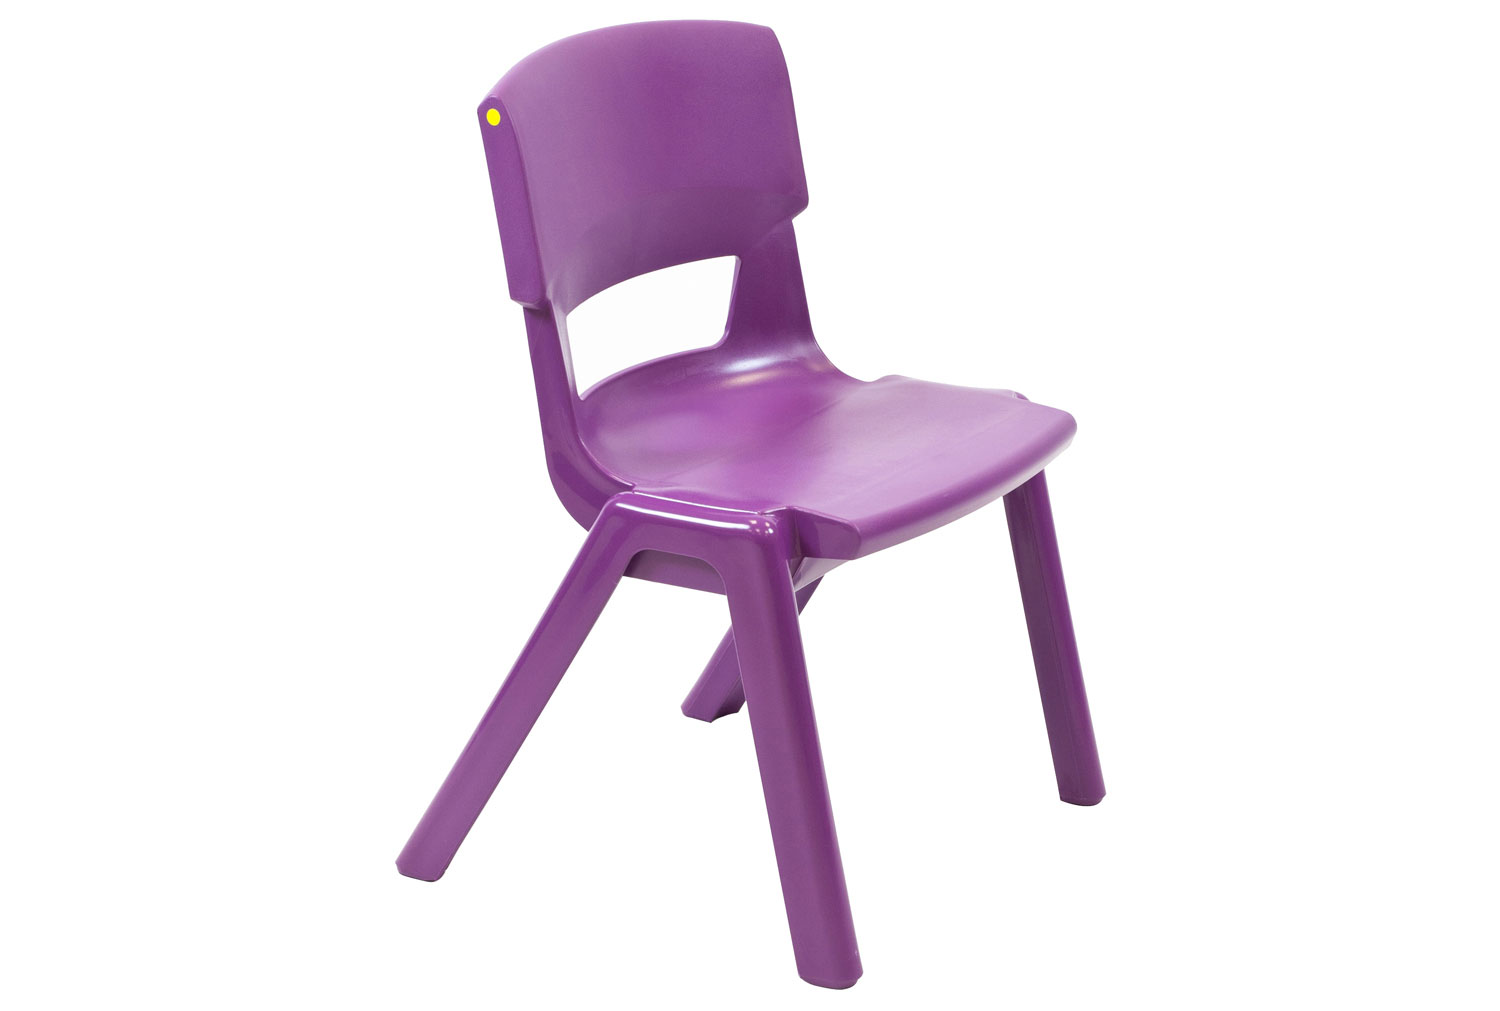 Qty 10 - Postura+ Classroom Chair, 6-8 Years - 34wx31dx35h (cm), Grape